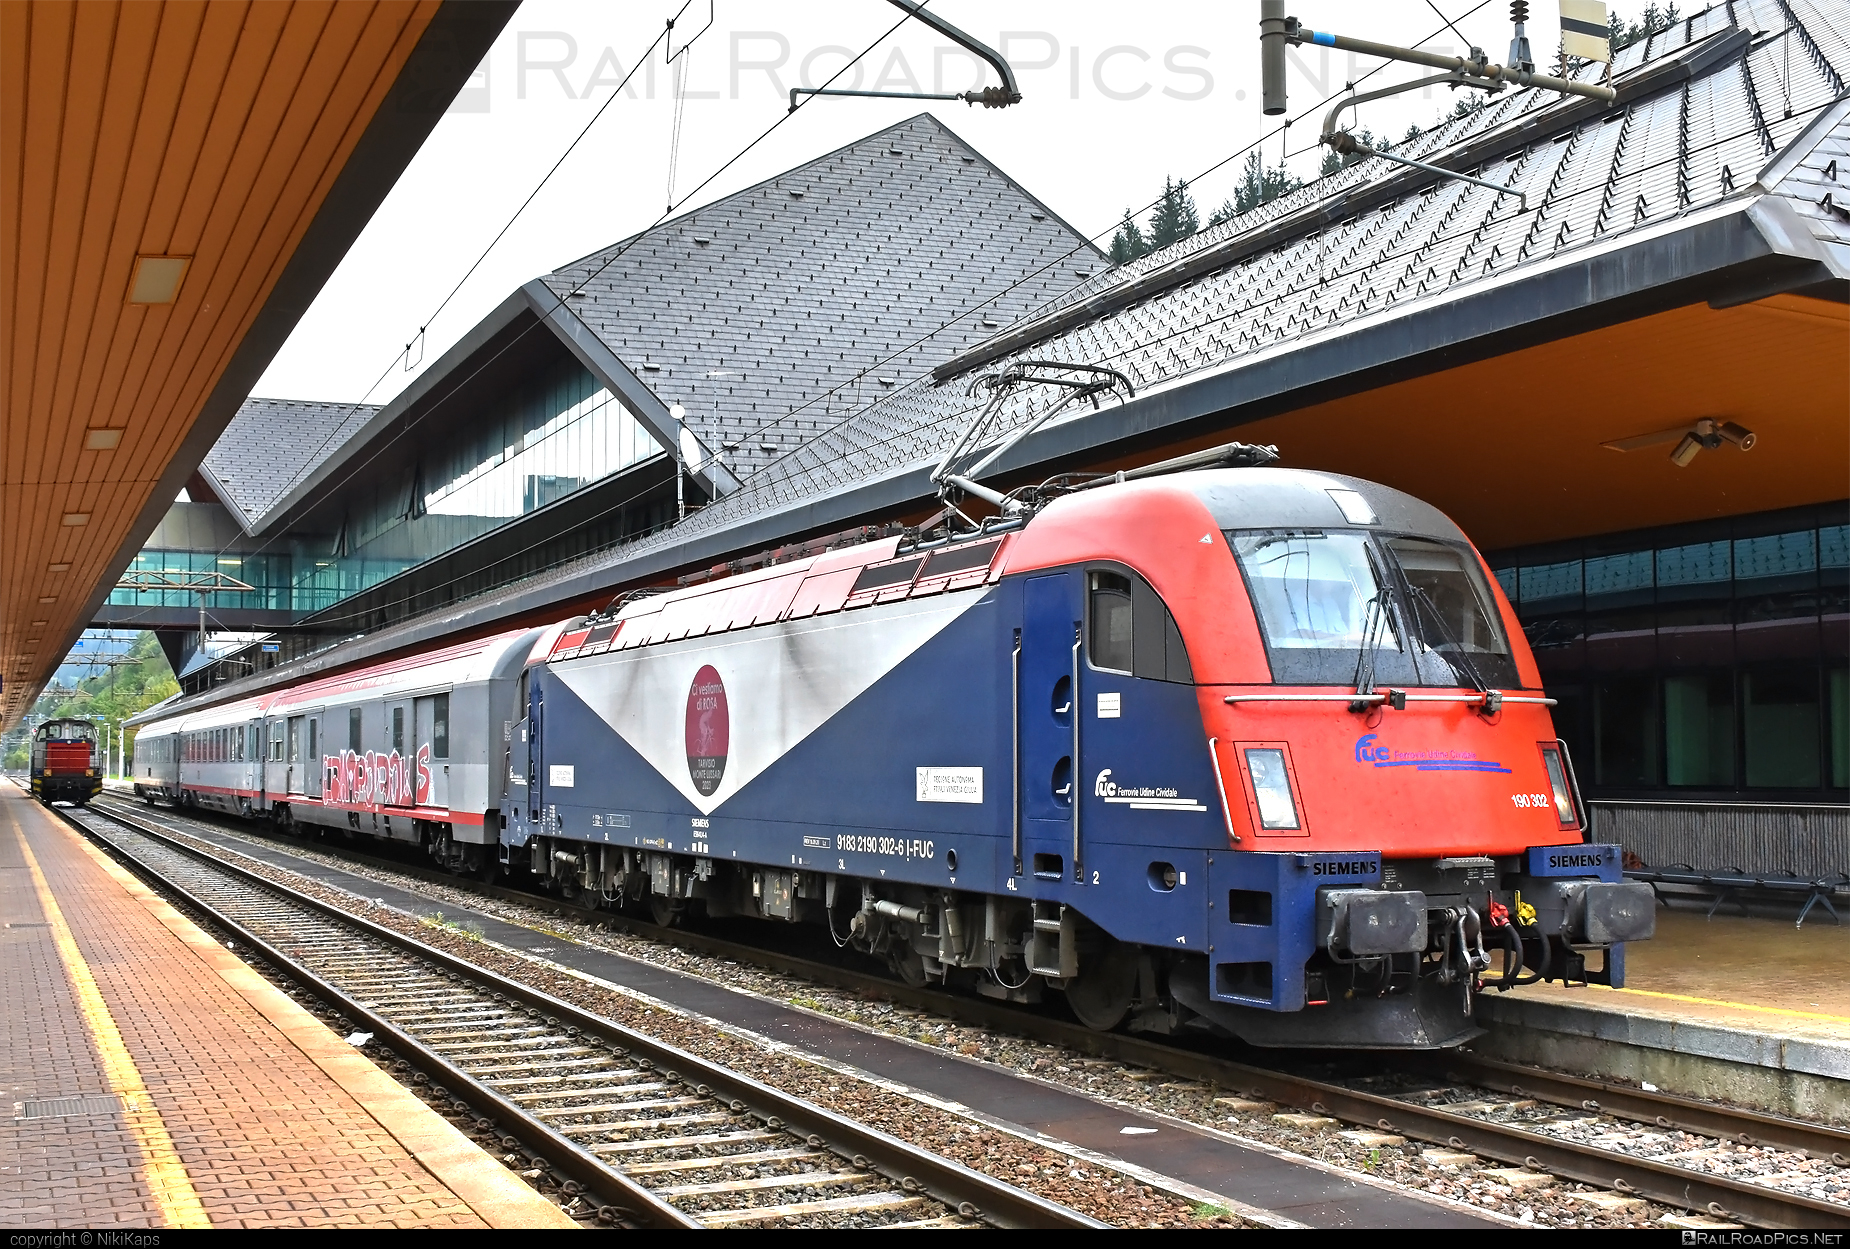 Siemens ES 64 U4 - 190 302 operated by Società Ferrovie Udine Cividale #es64 #es64u4 #eurosprinter #fuc #siemens #siemenses64 #siemenses64u4 #siemenstaurus #taurus #tauruslocomotive